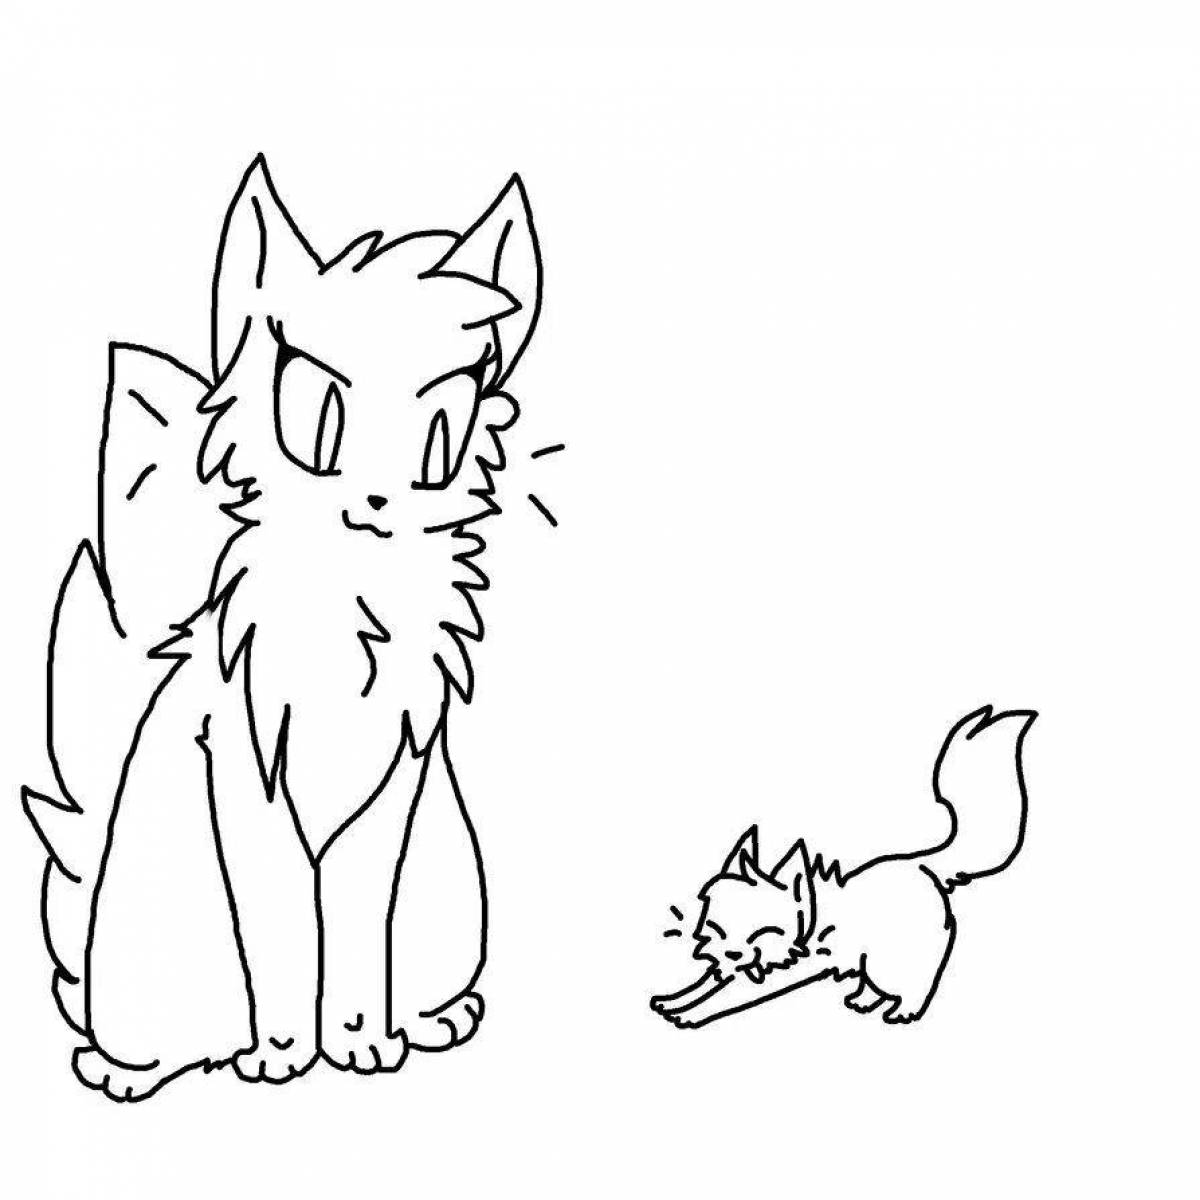 Cute yoshi and lana the cat